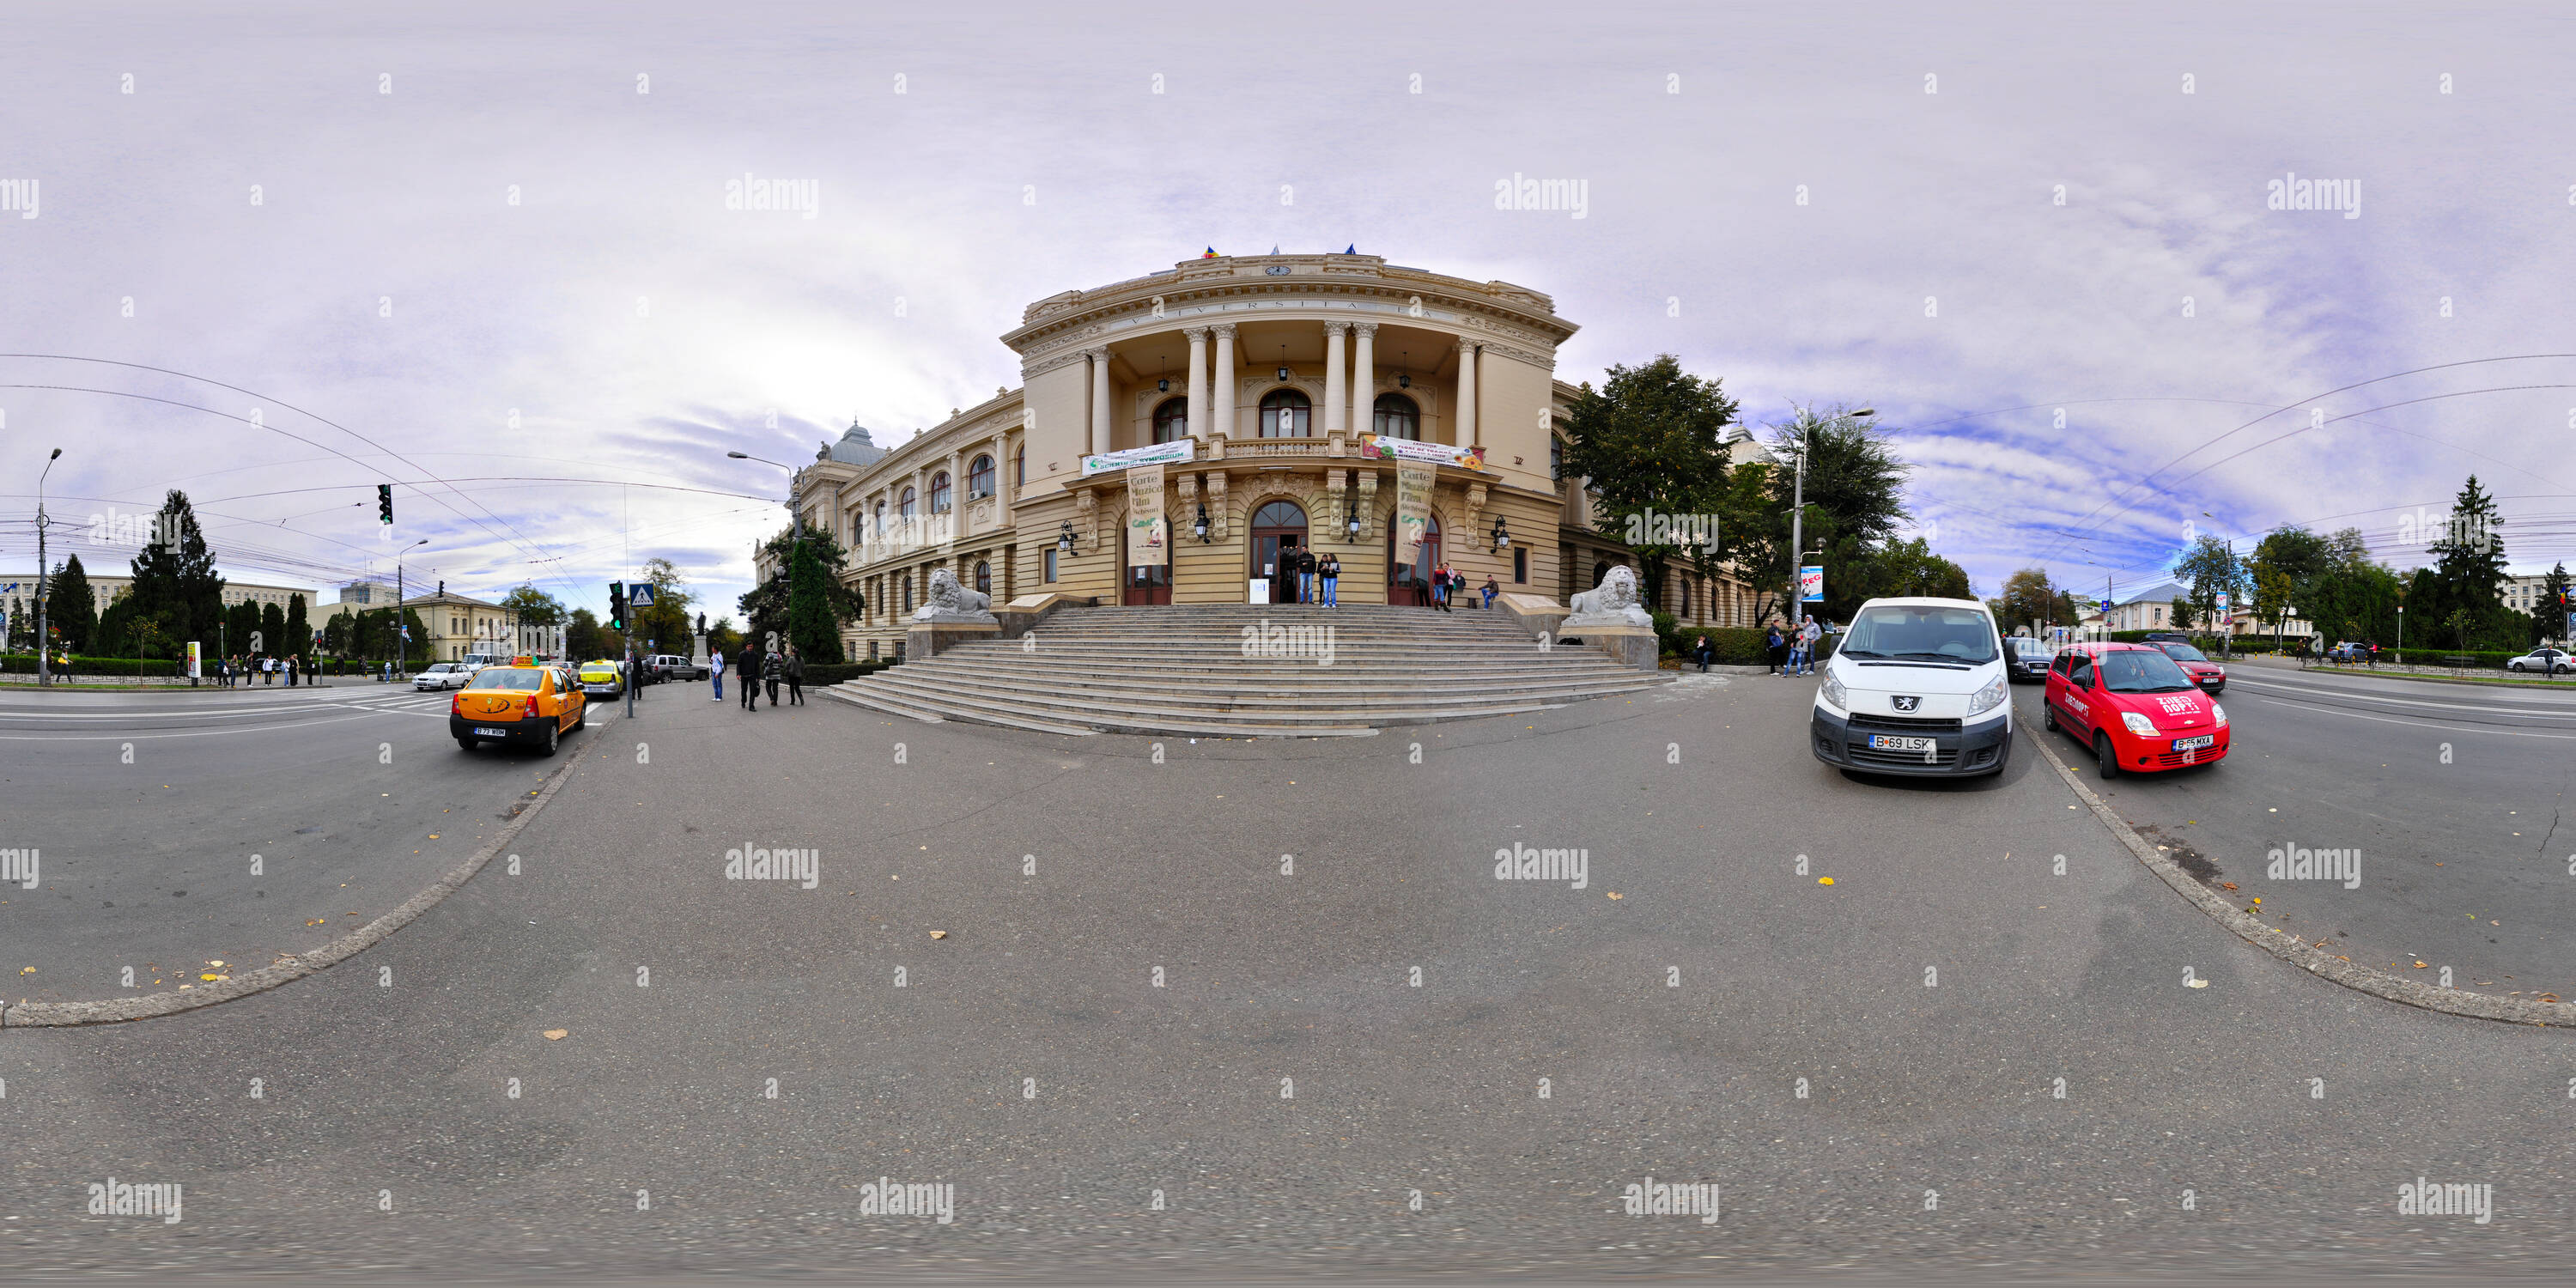 360 Grad Panorama Ansicht von "Alexandru Ioan Cuza" Universität in Iasi